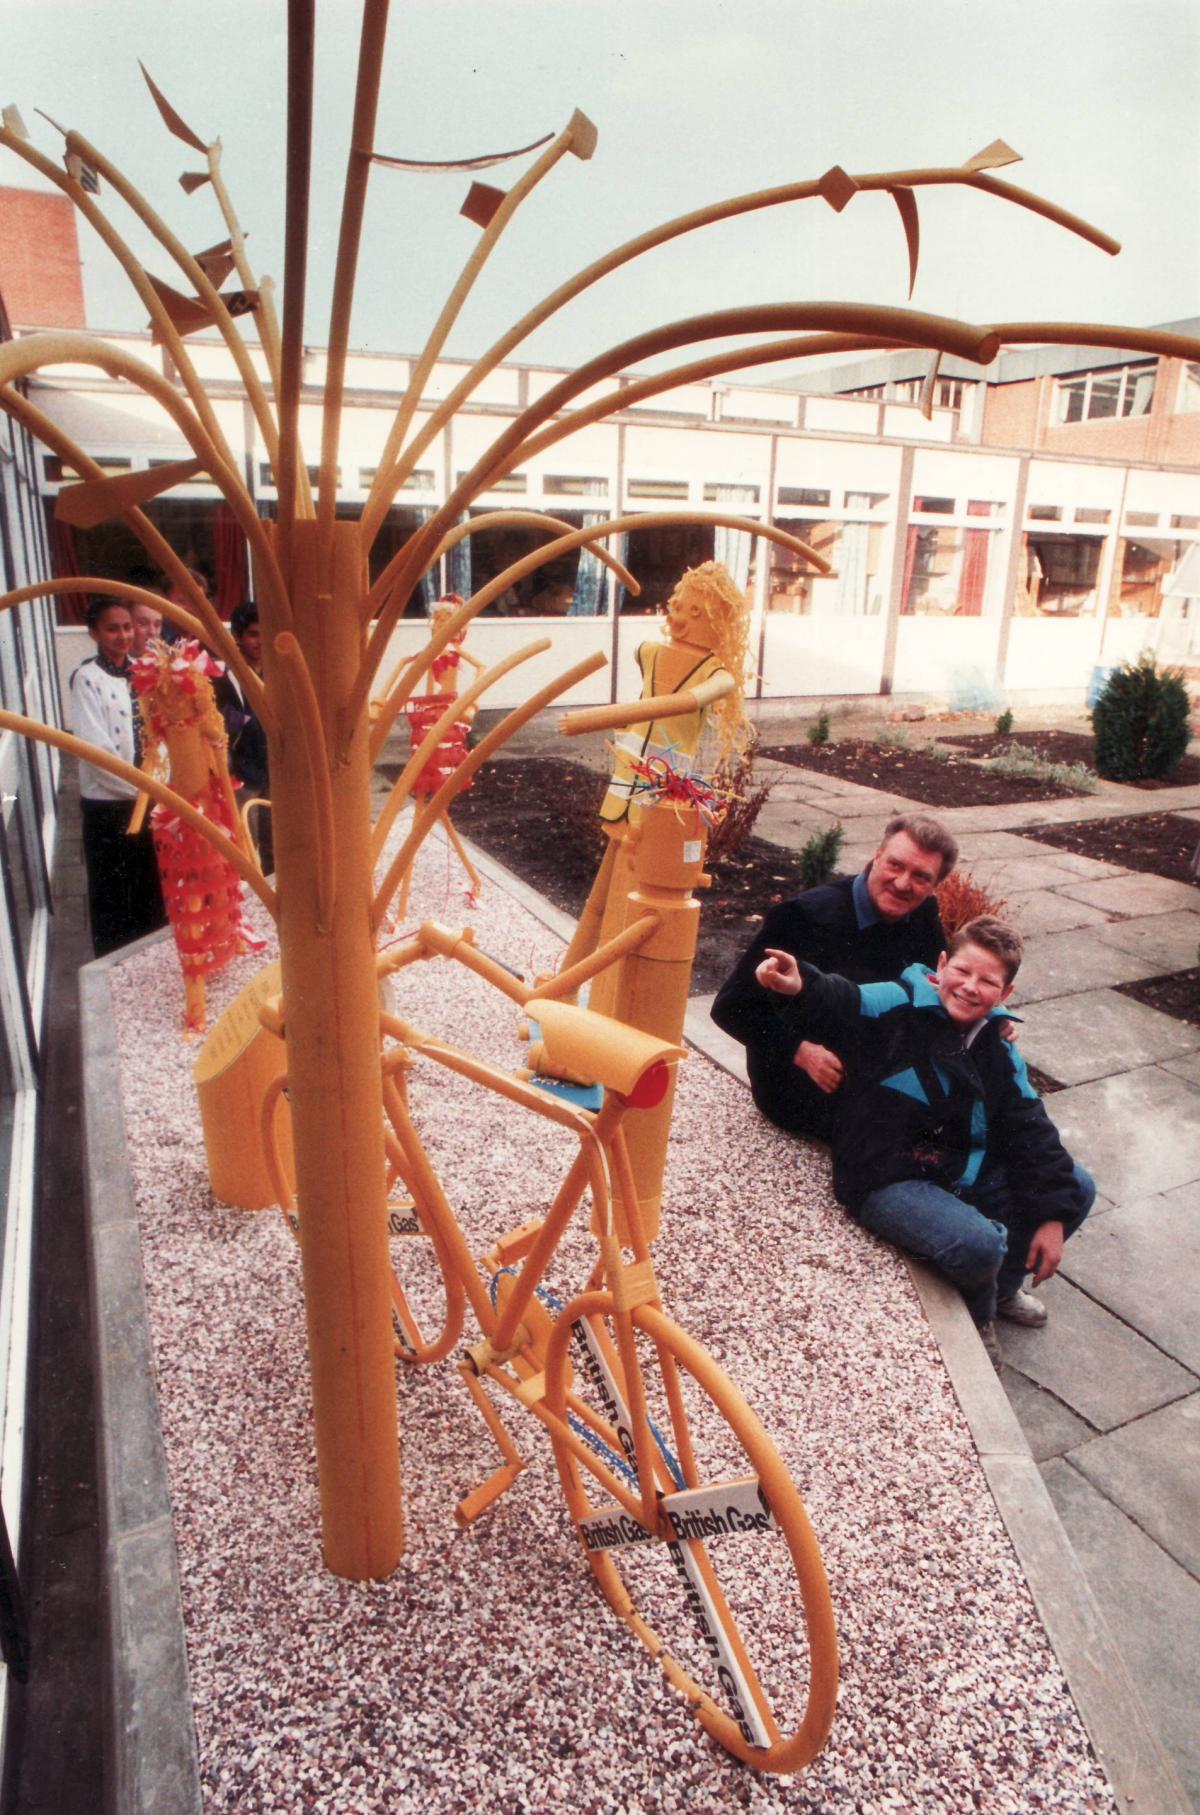 The sculpture at Grange Upper school 1990